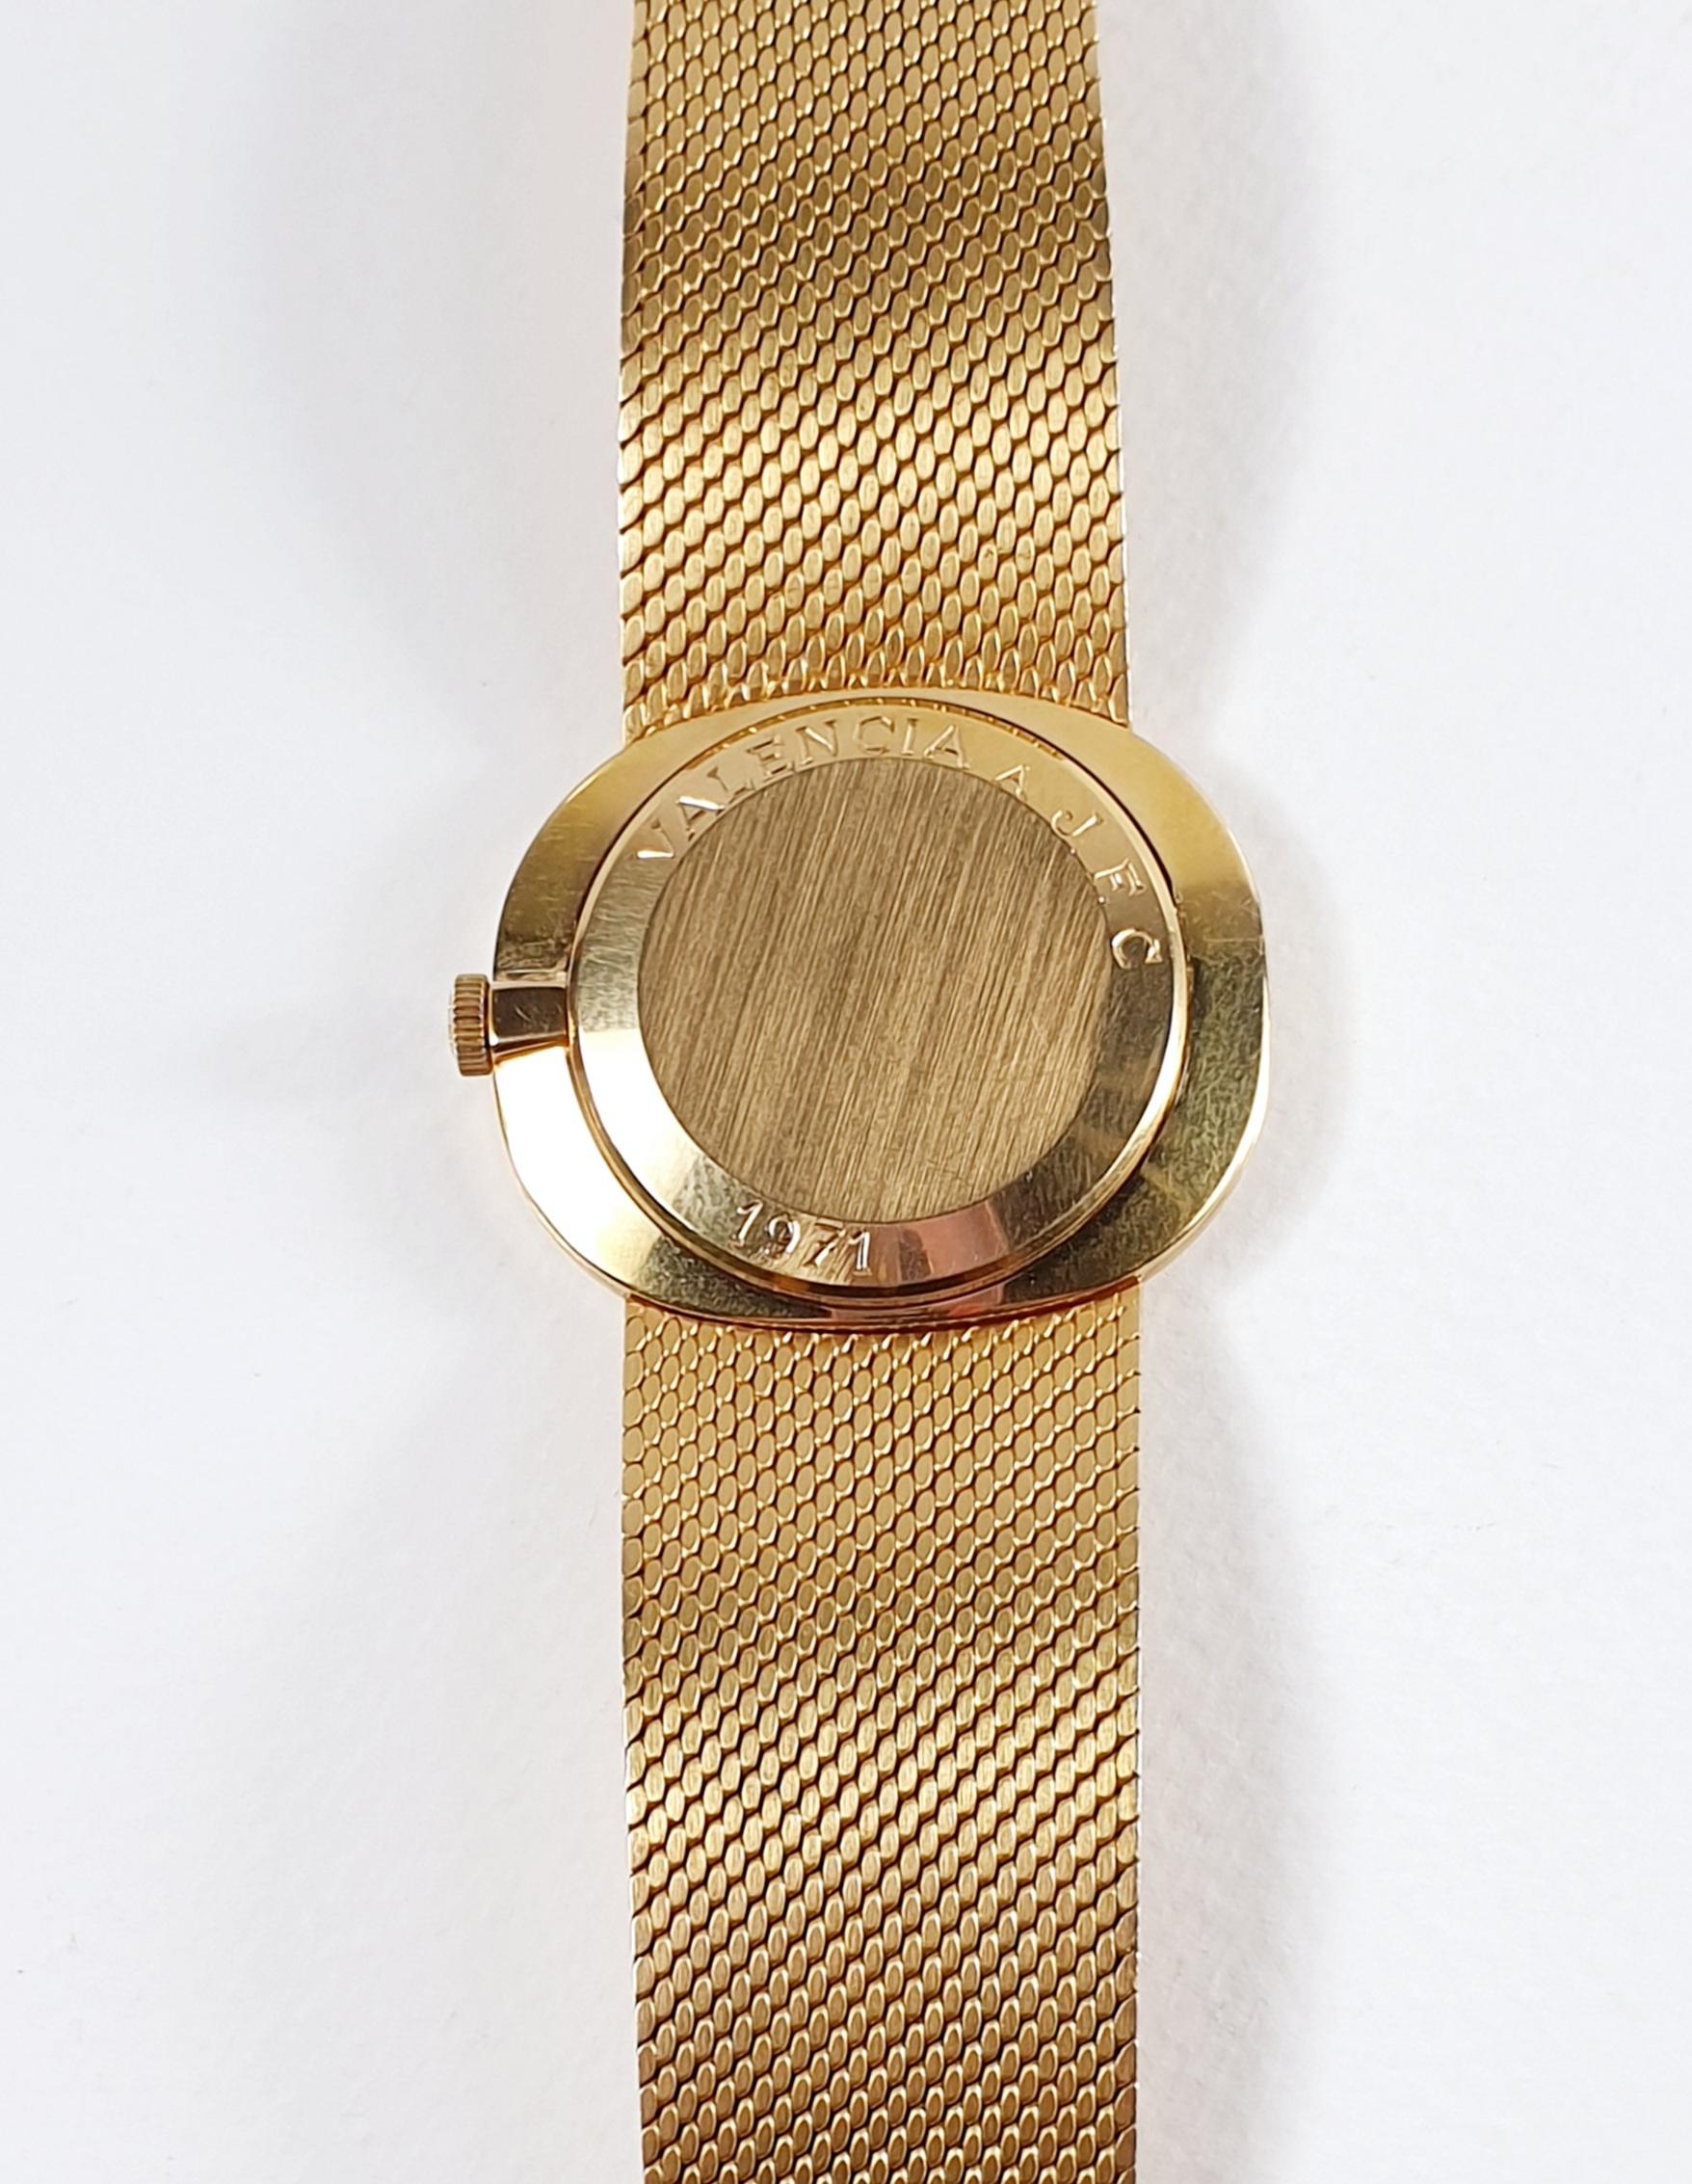 Modern Patek Philippe Watch Golden Elipse Champagne Dial with Original Case 1970's